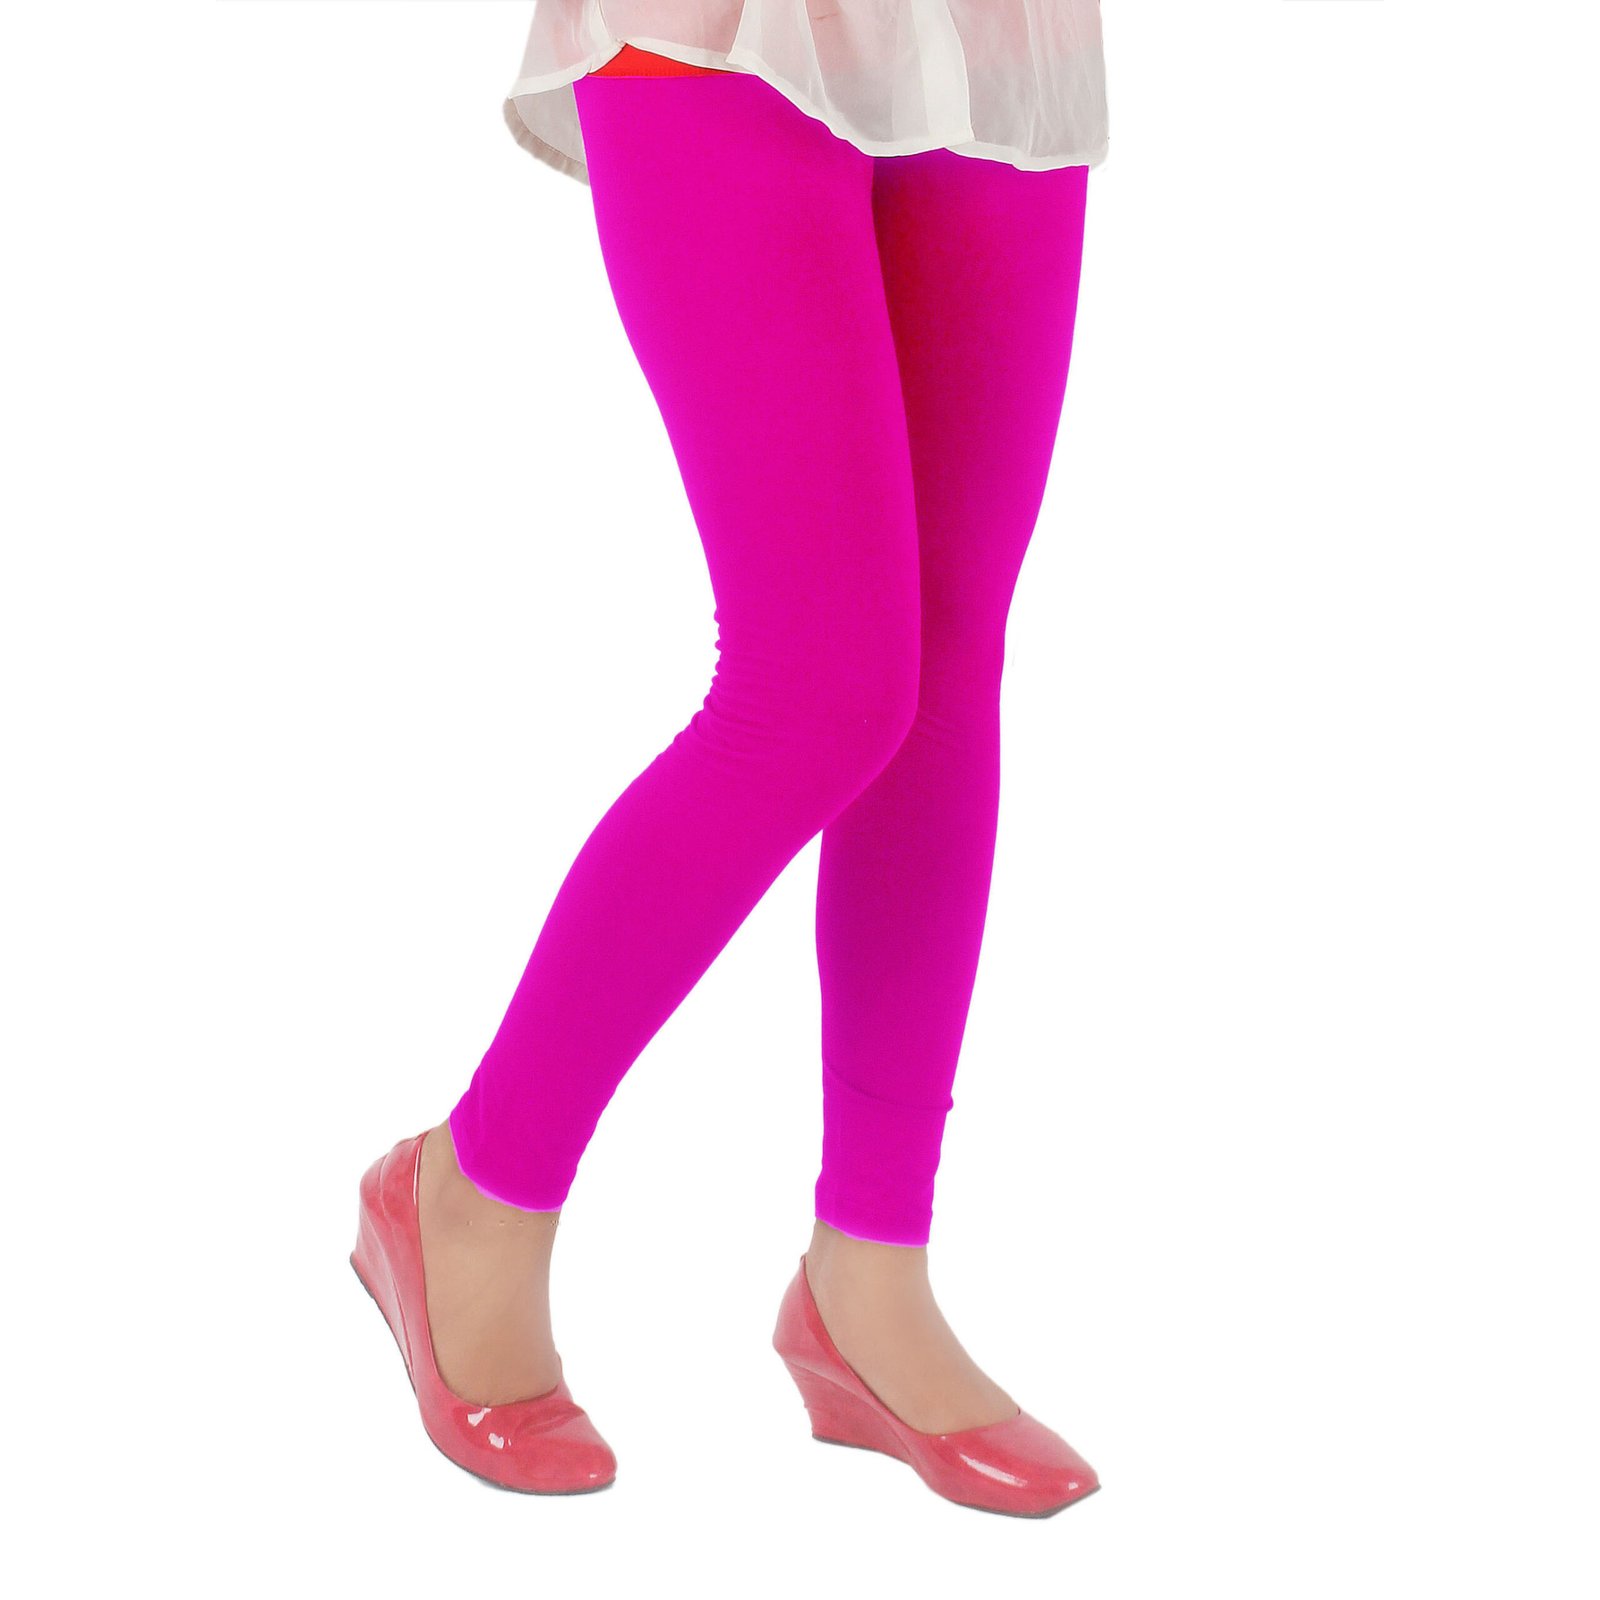 Moschino Kid-Teen - Girls Pink Cotton Leggings | Childrensalon Outlet